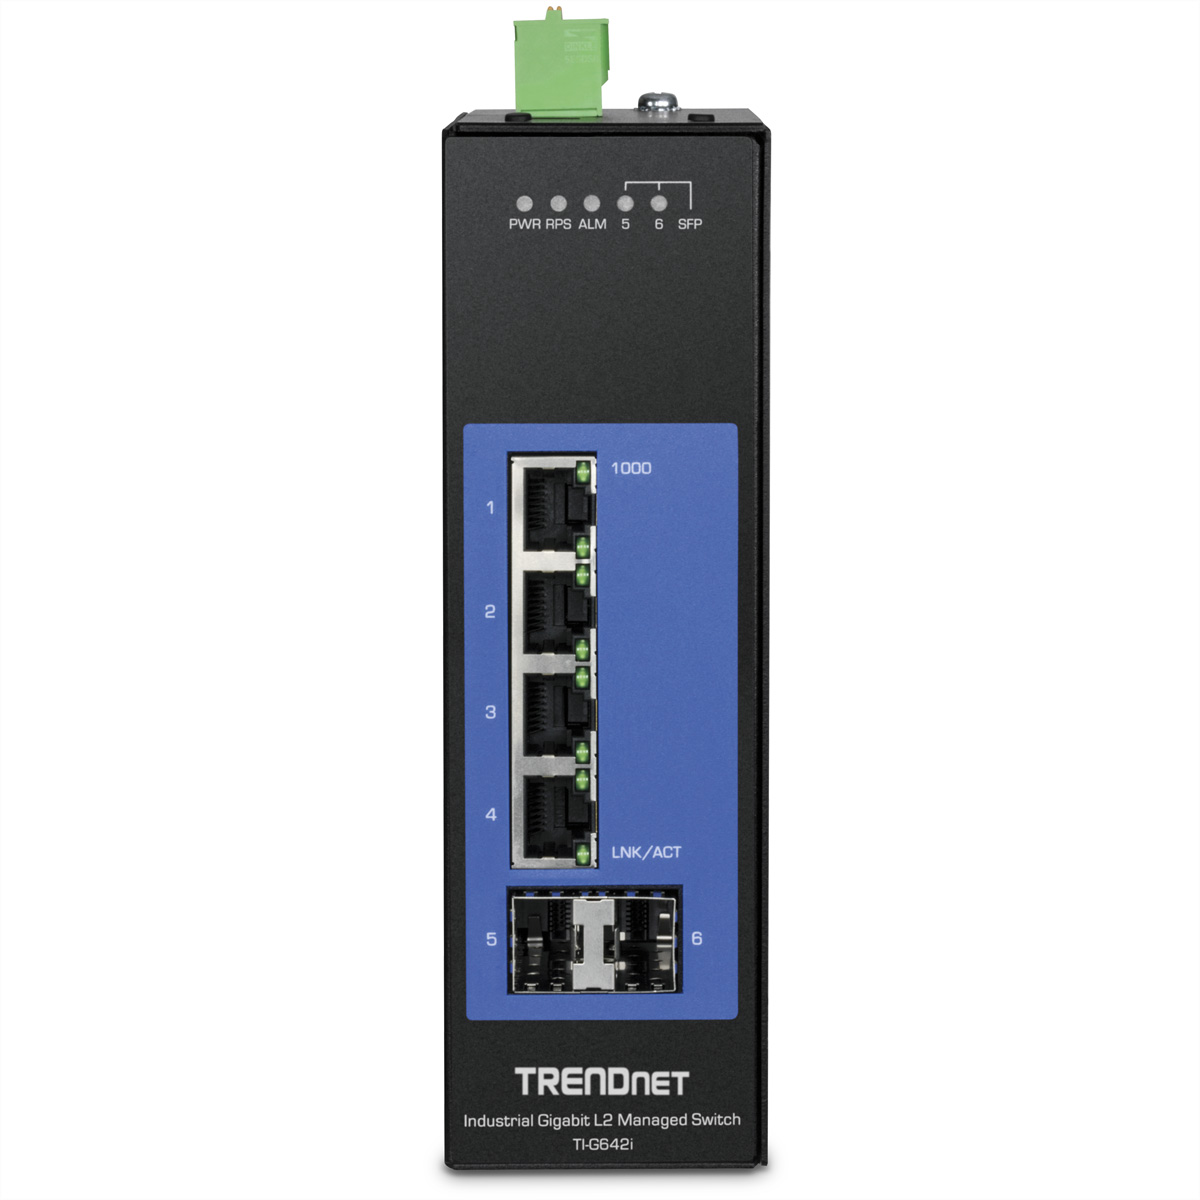 TRENDNET TI-G642i DIN-Rail Switch 6-Port Industrial Switch Gigabit Ethernet Gigabit L2